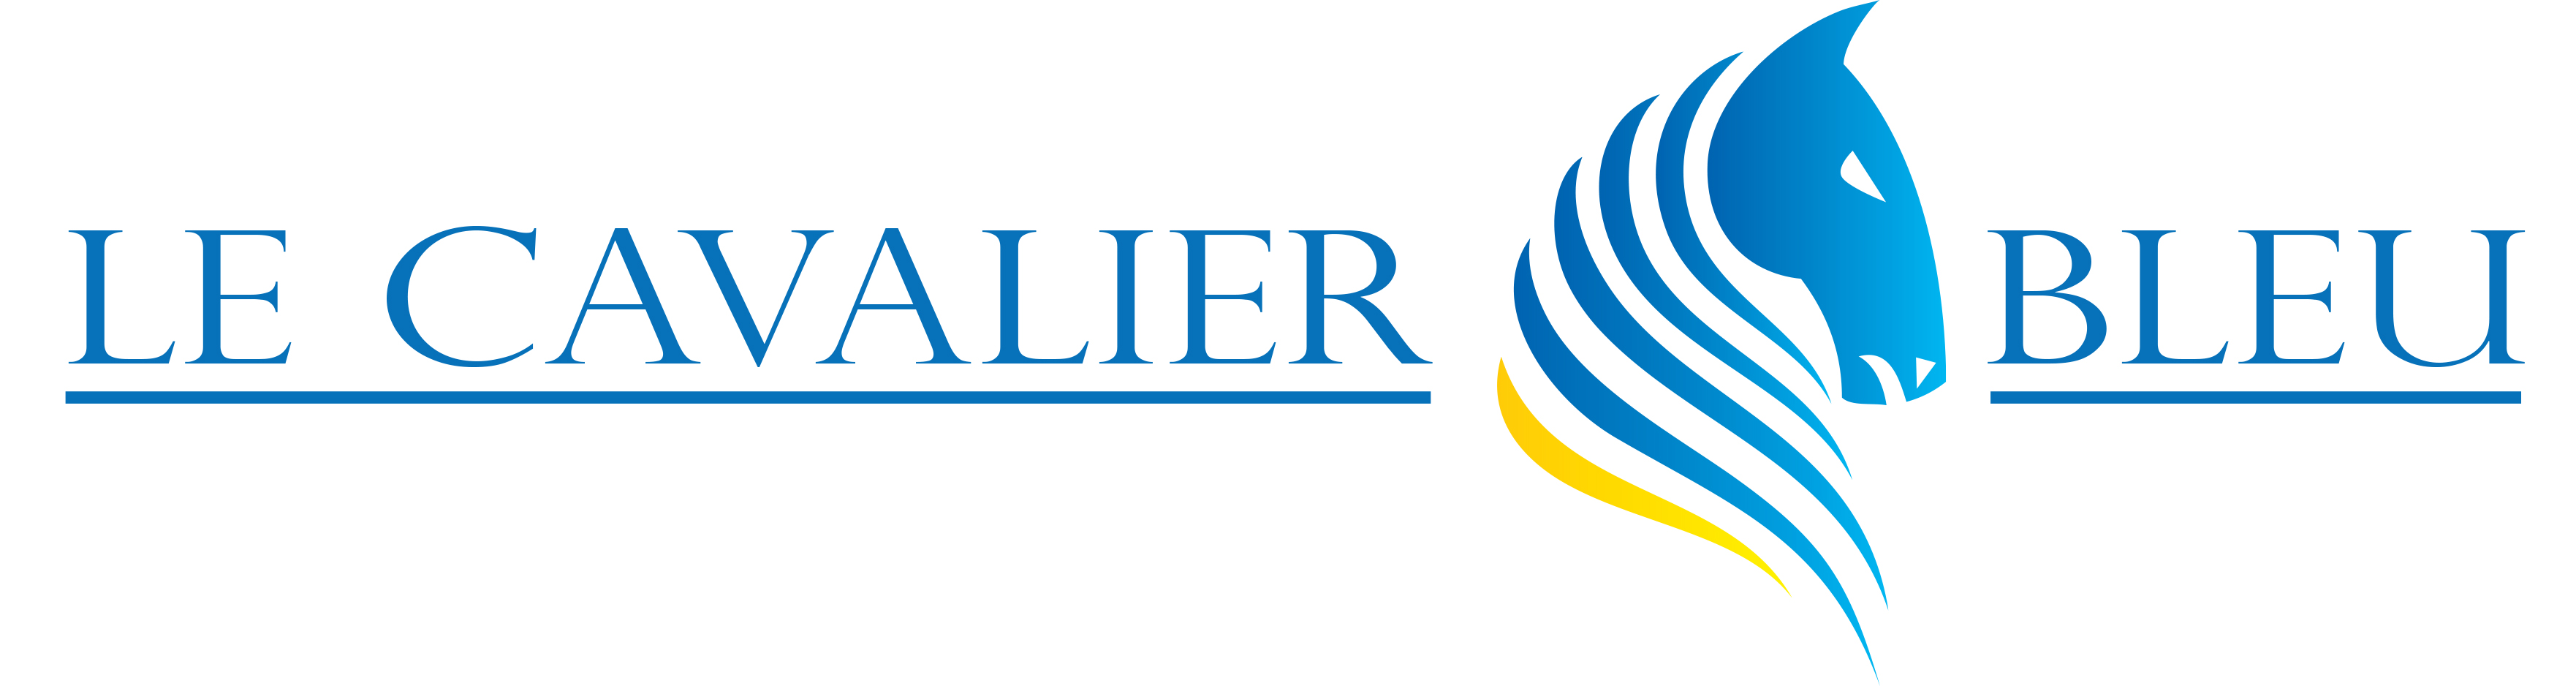 logo-cavalier-bleu-text